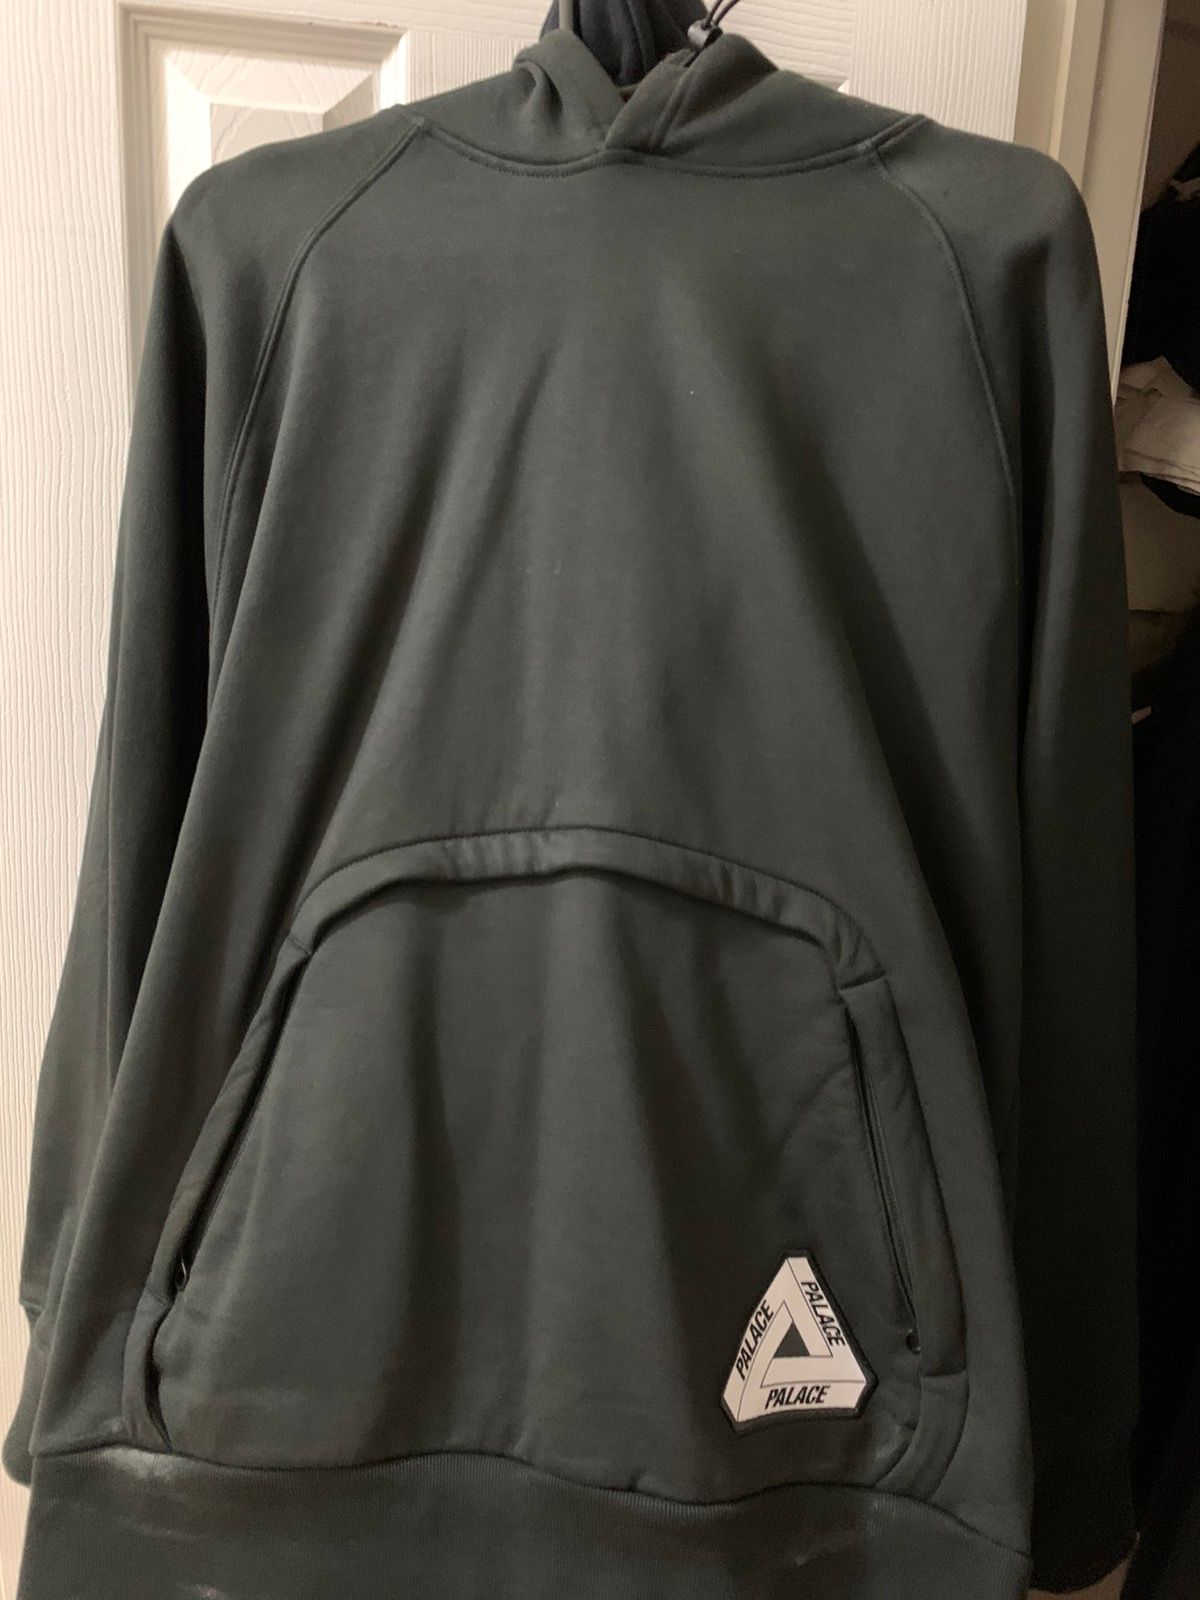 Palace Tri pocket hoodie Size US M / EU 48-50 / 2 - 7 Preview